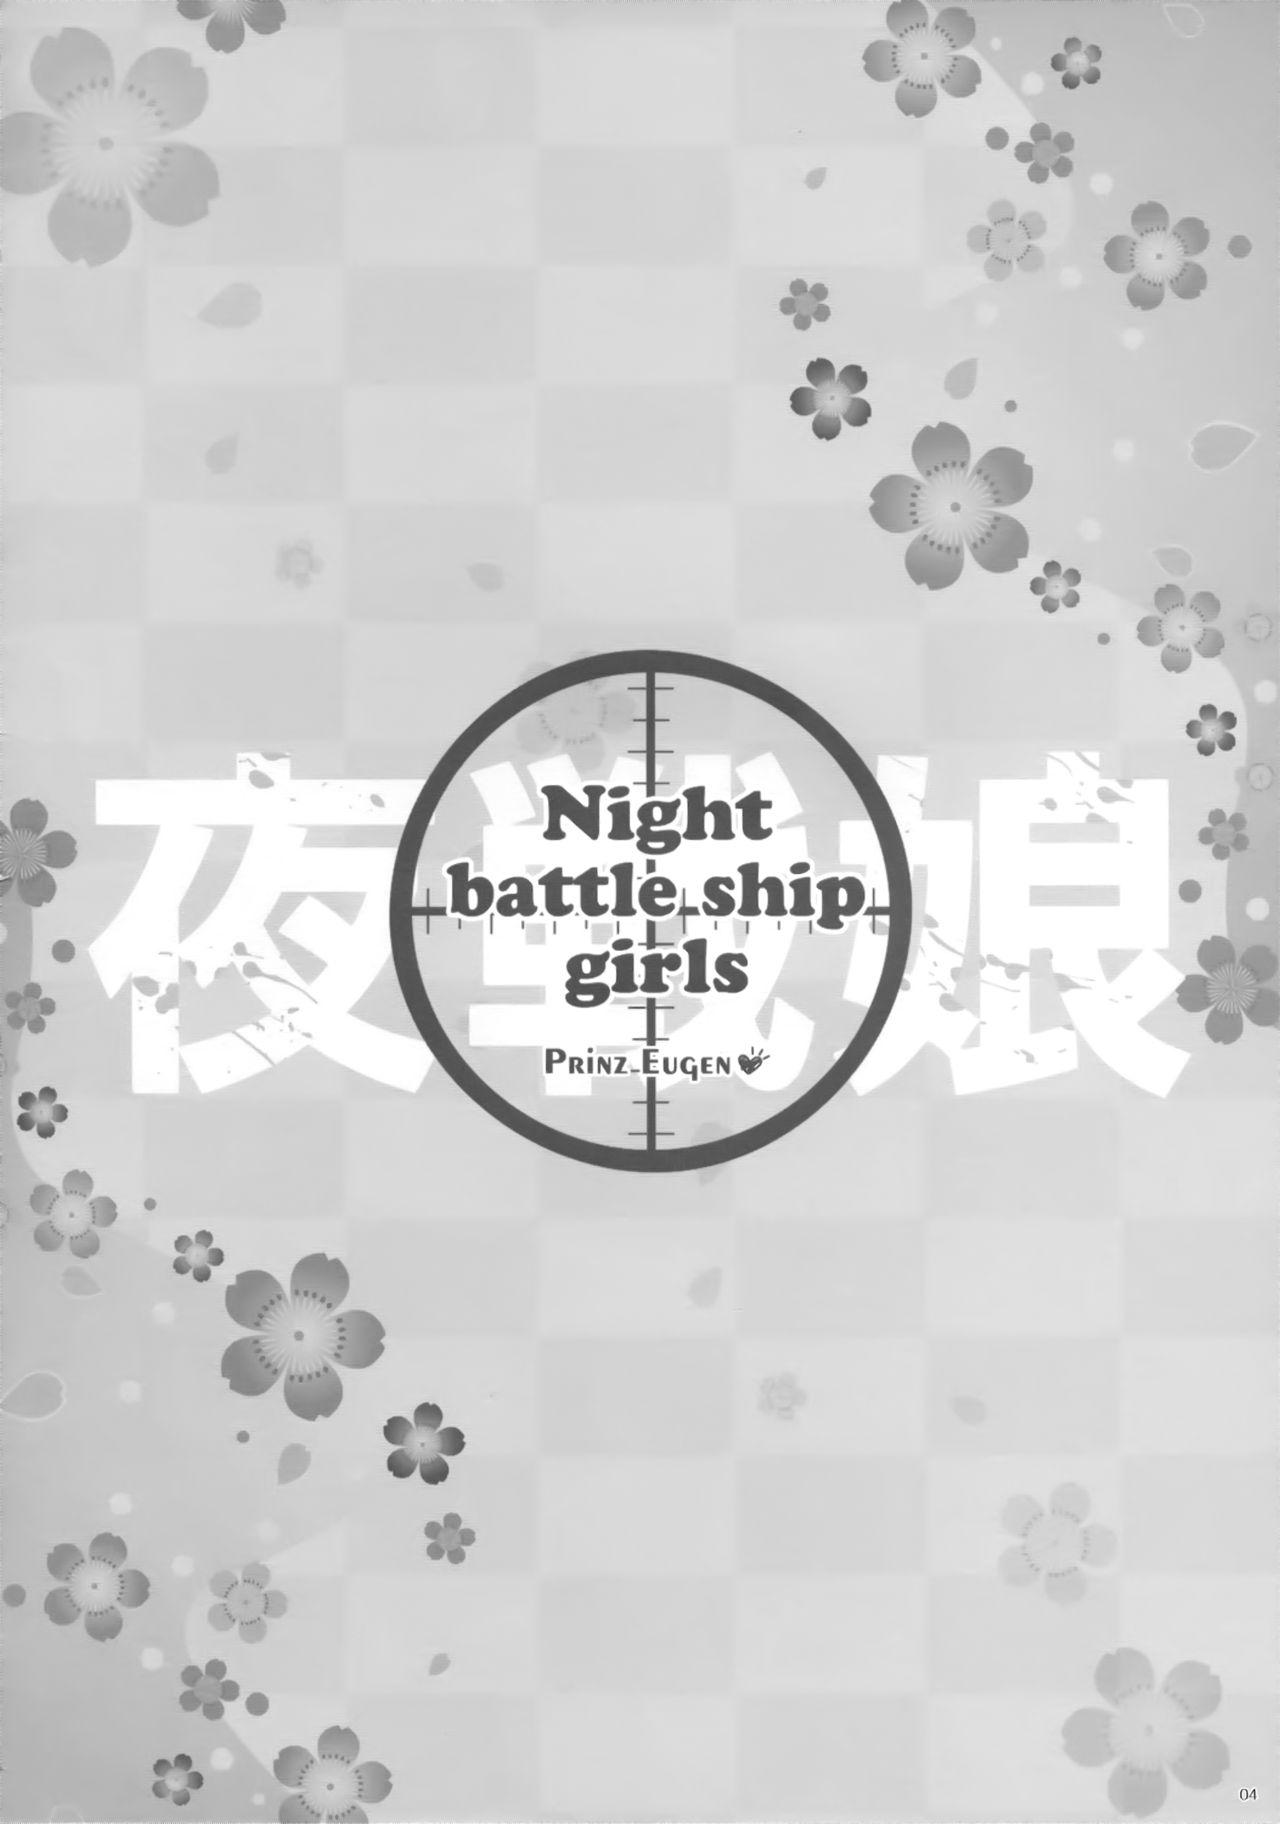 Night battle ship girls 2